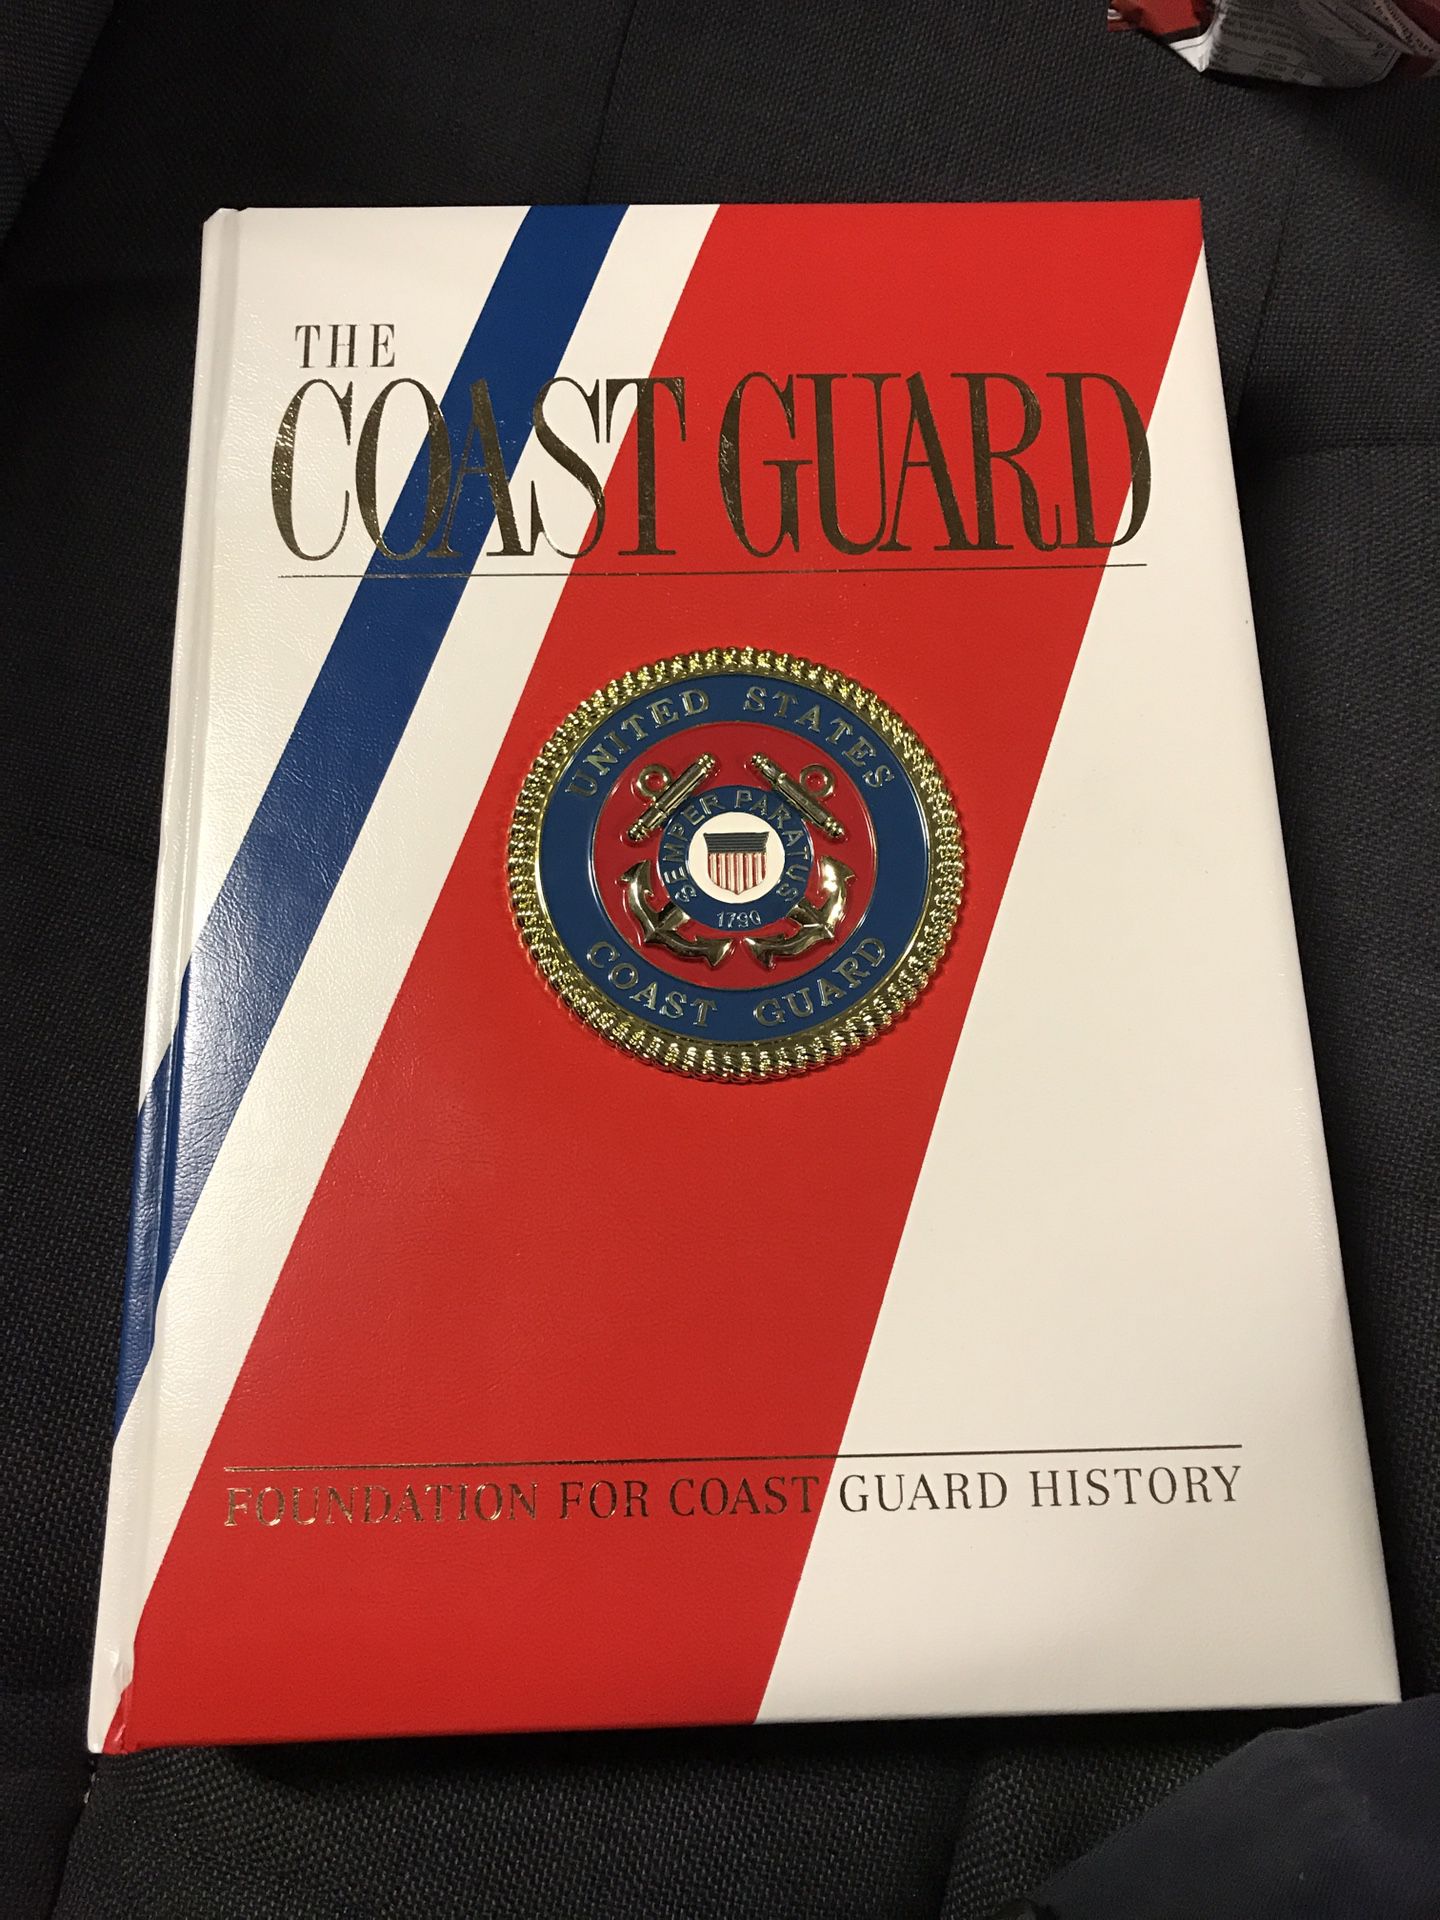 THE COAST GUARD BOOK Foundation for coast guard history. H